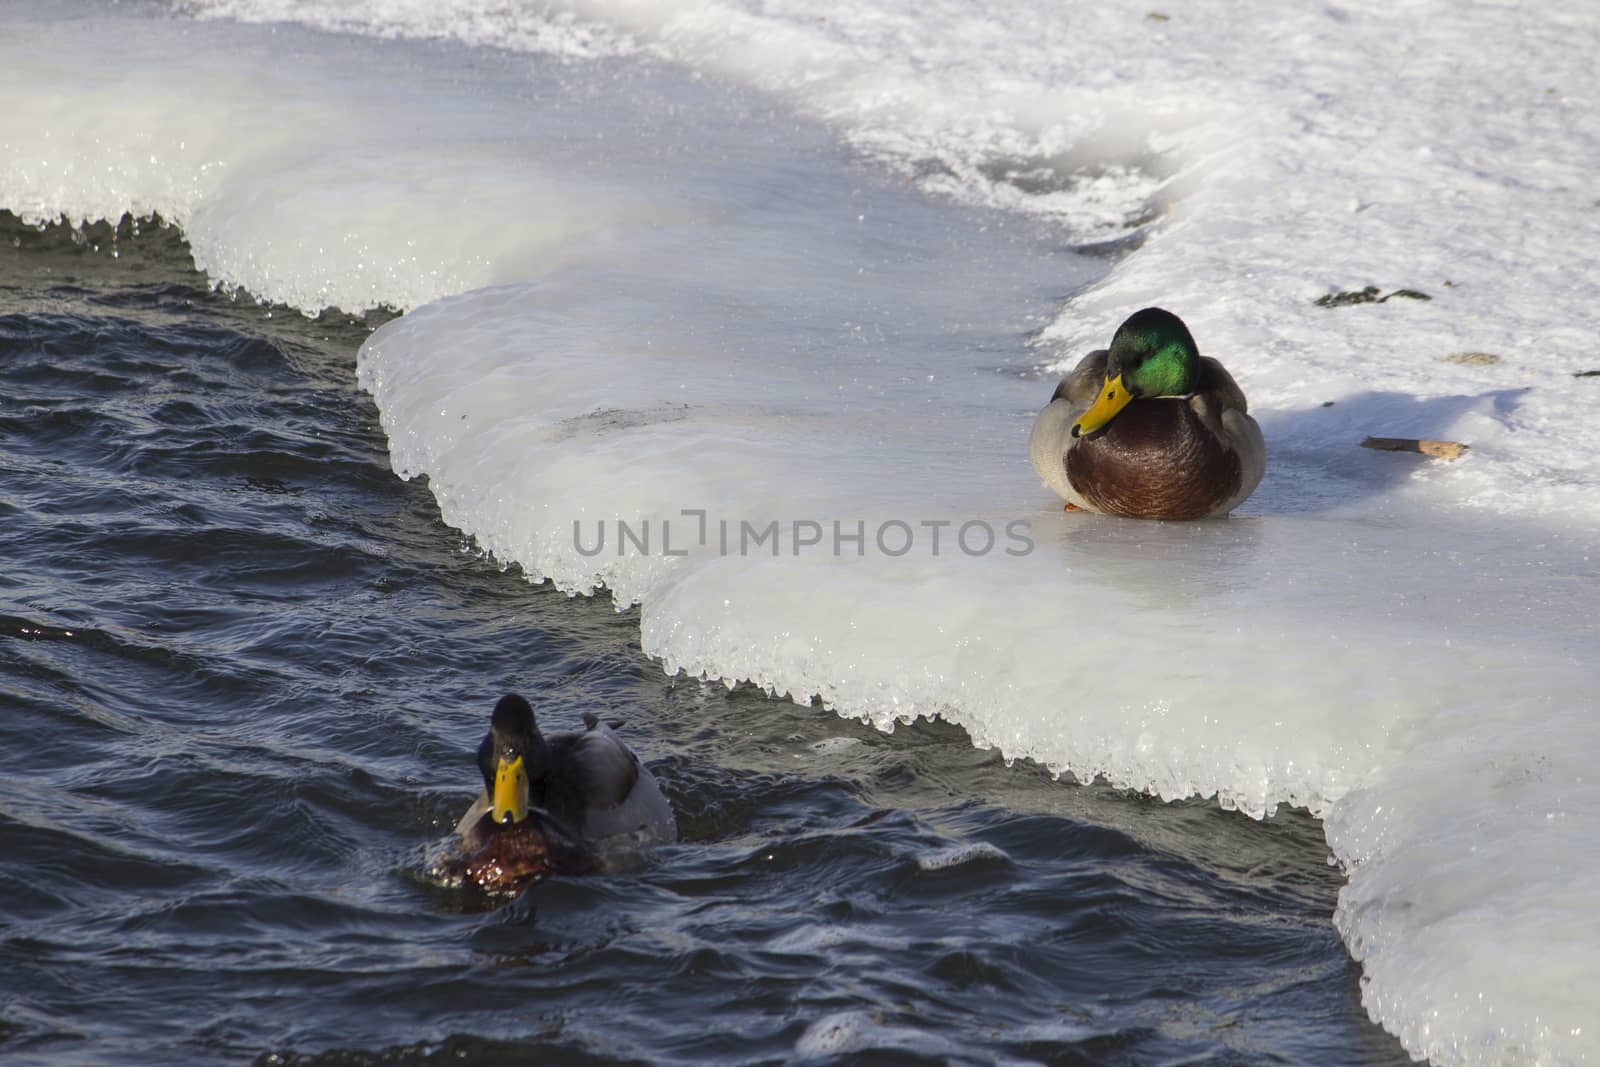 A flock of wild ducks in the winter river. Russia. Tula.